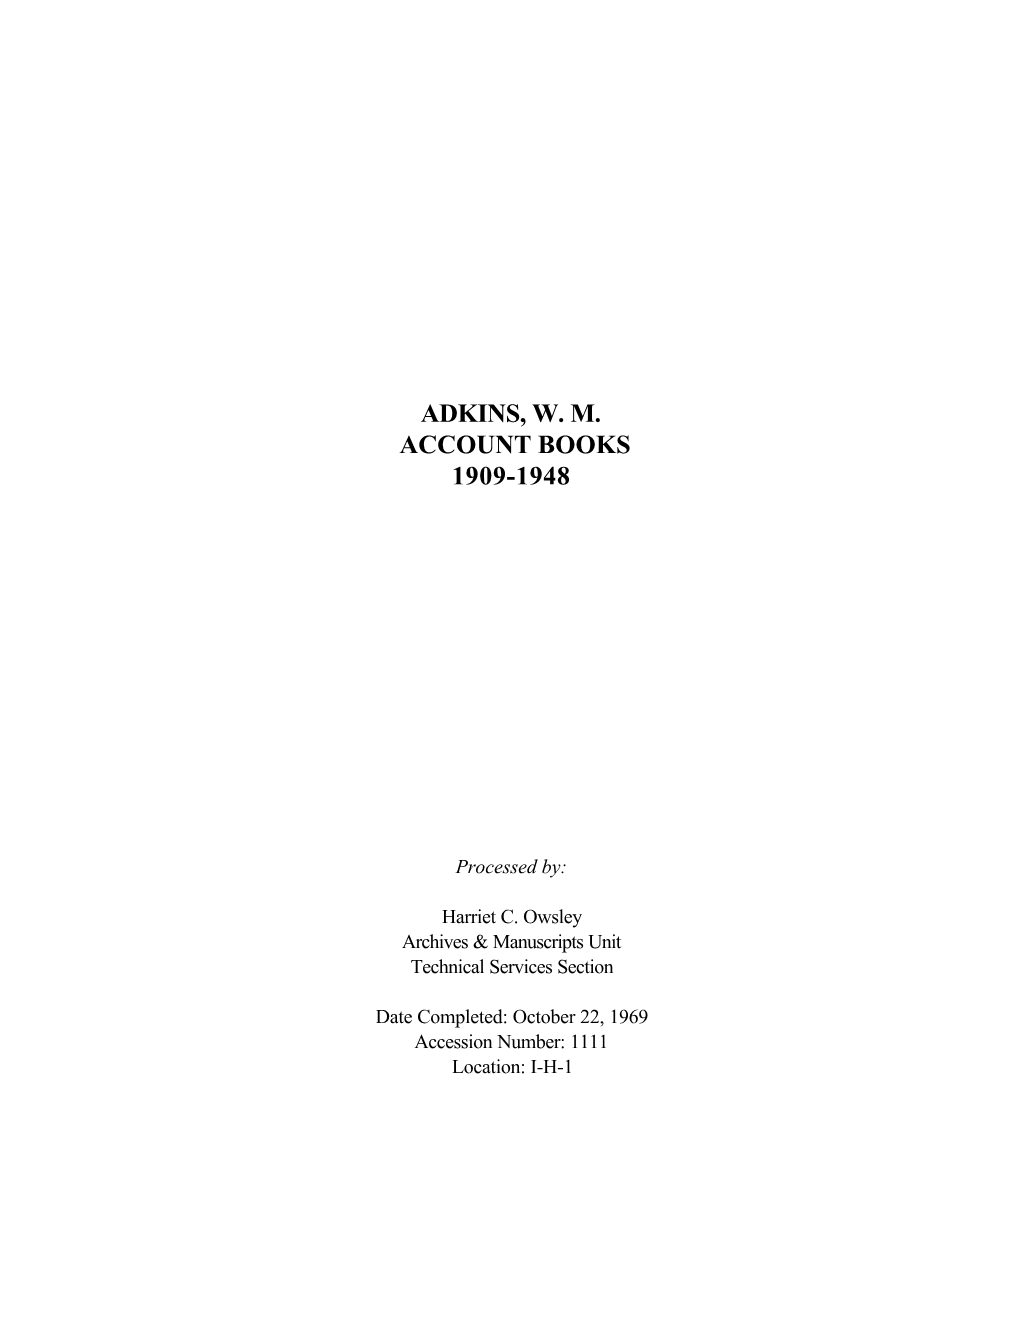 W.M. Adkins Account Books, 1909-1948